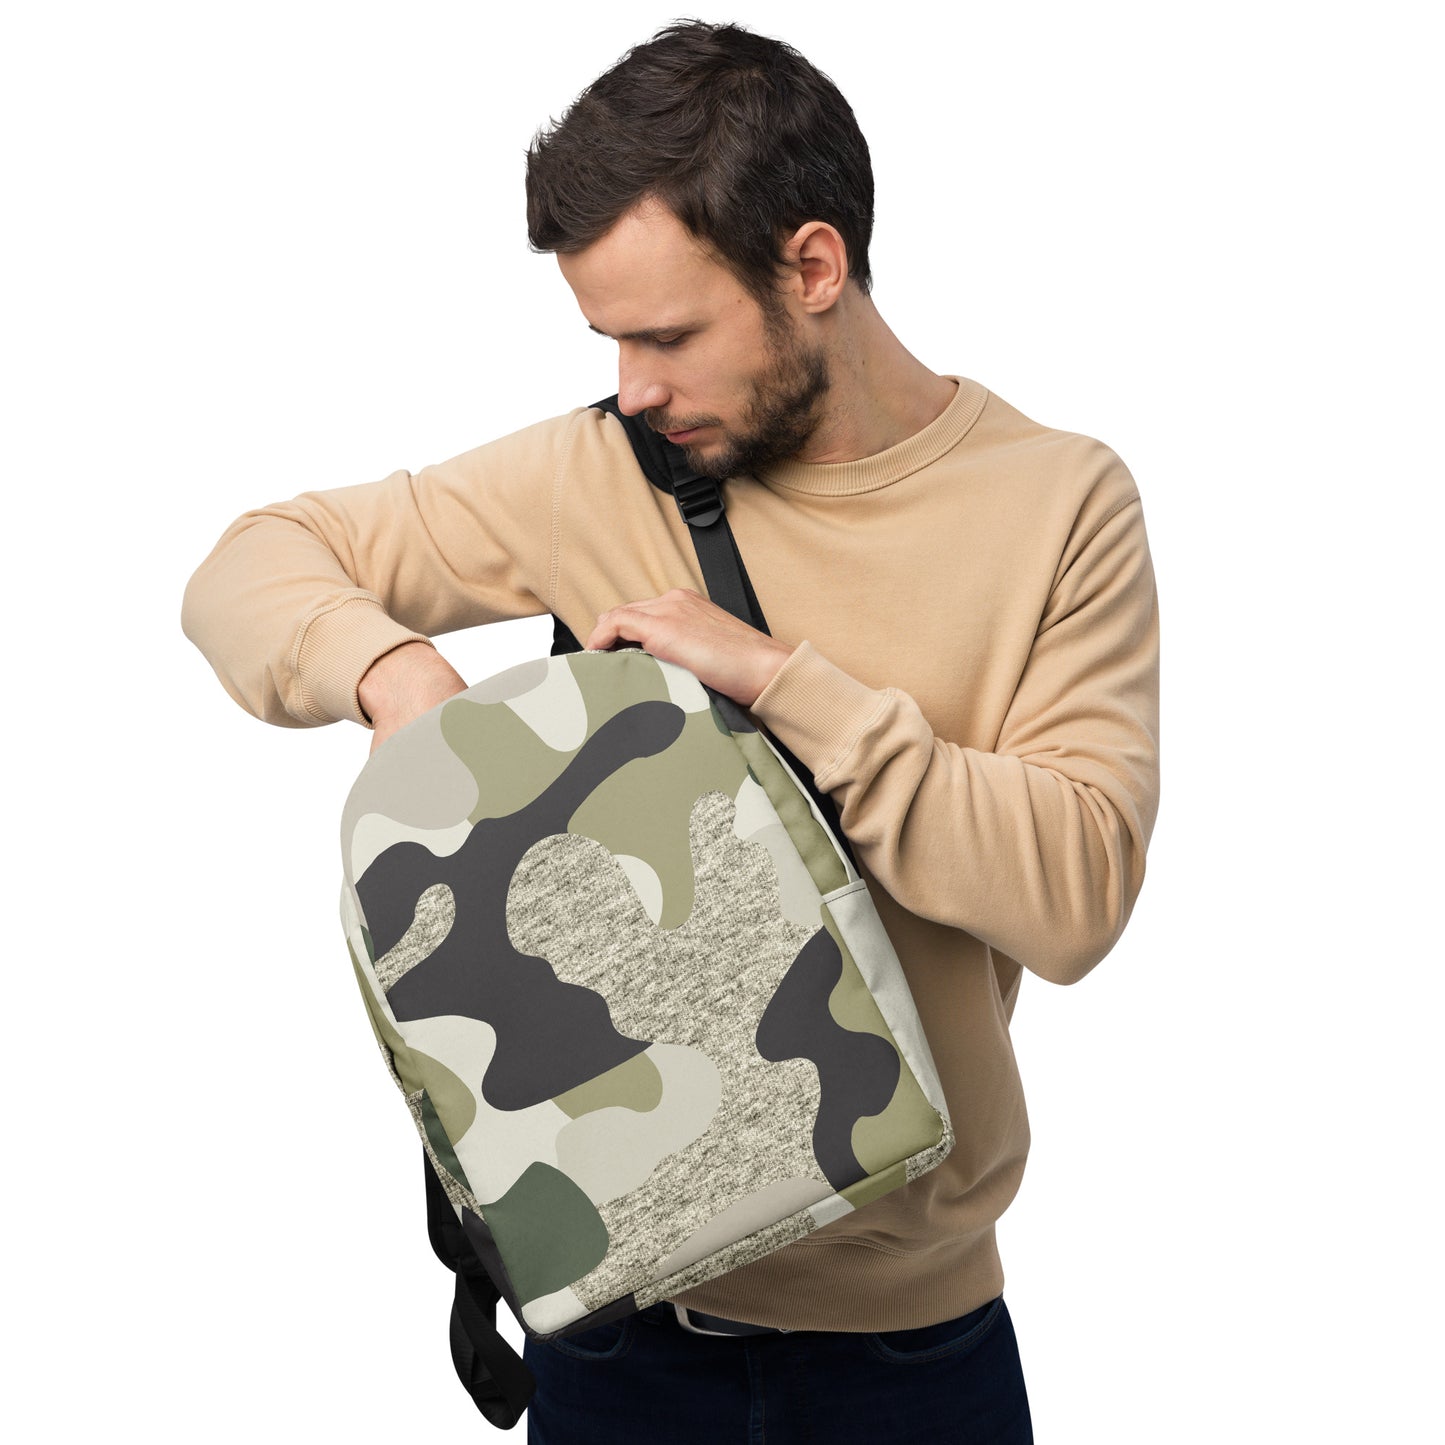 Camo Minimalist Backpack